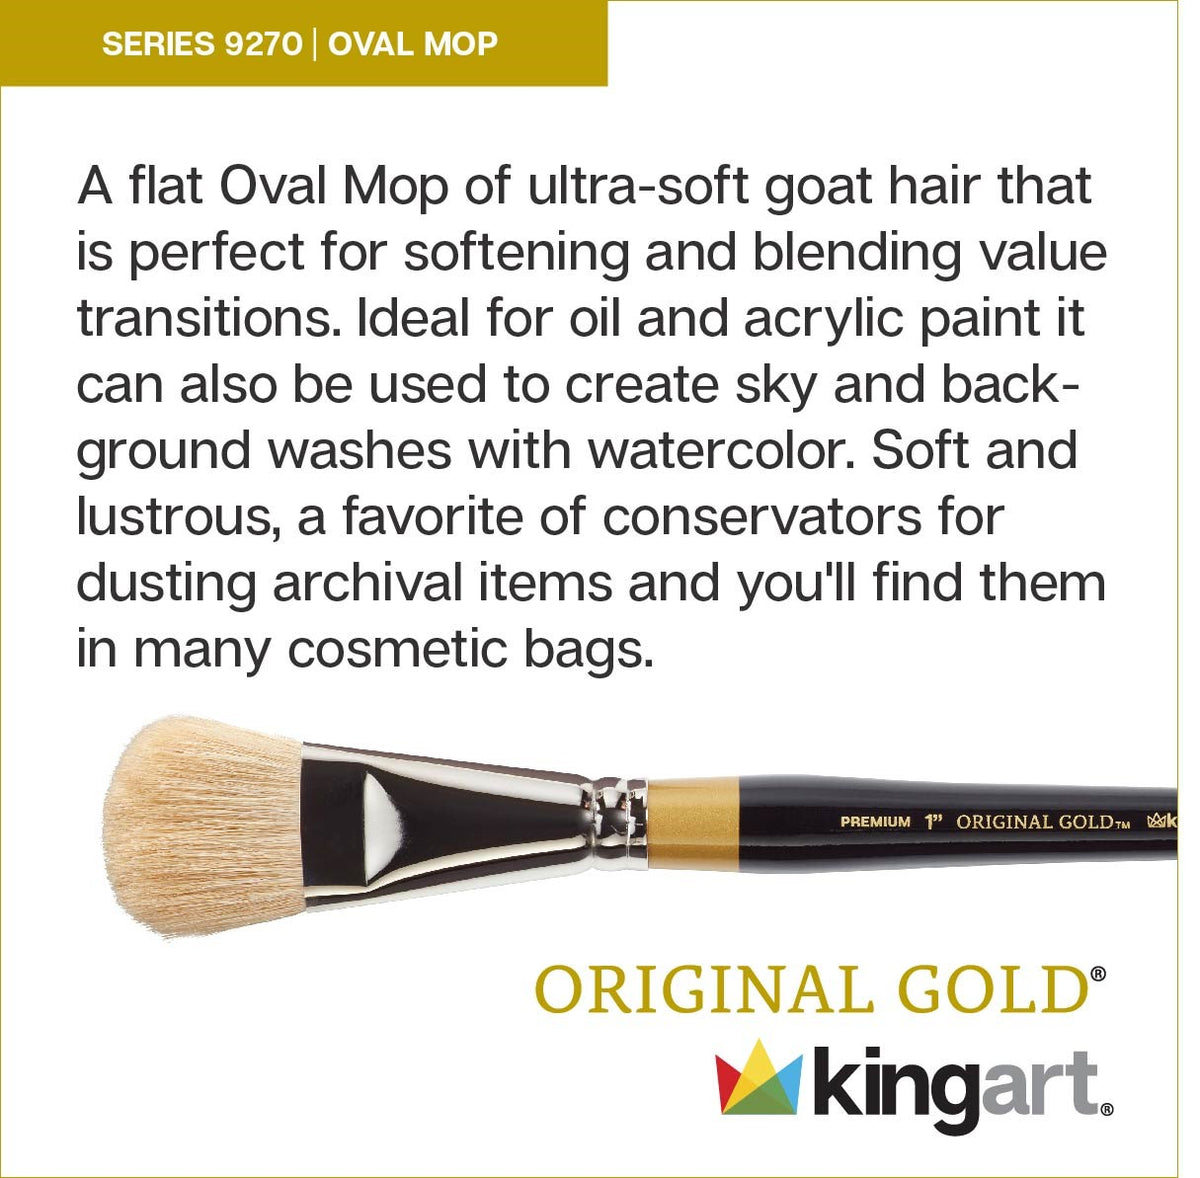 KINGART® Original Gold® 9270 Oval Mop Super Soft Natural Goat Hair Series  Premium Multimedia Artist Brushes, Set of 4